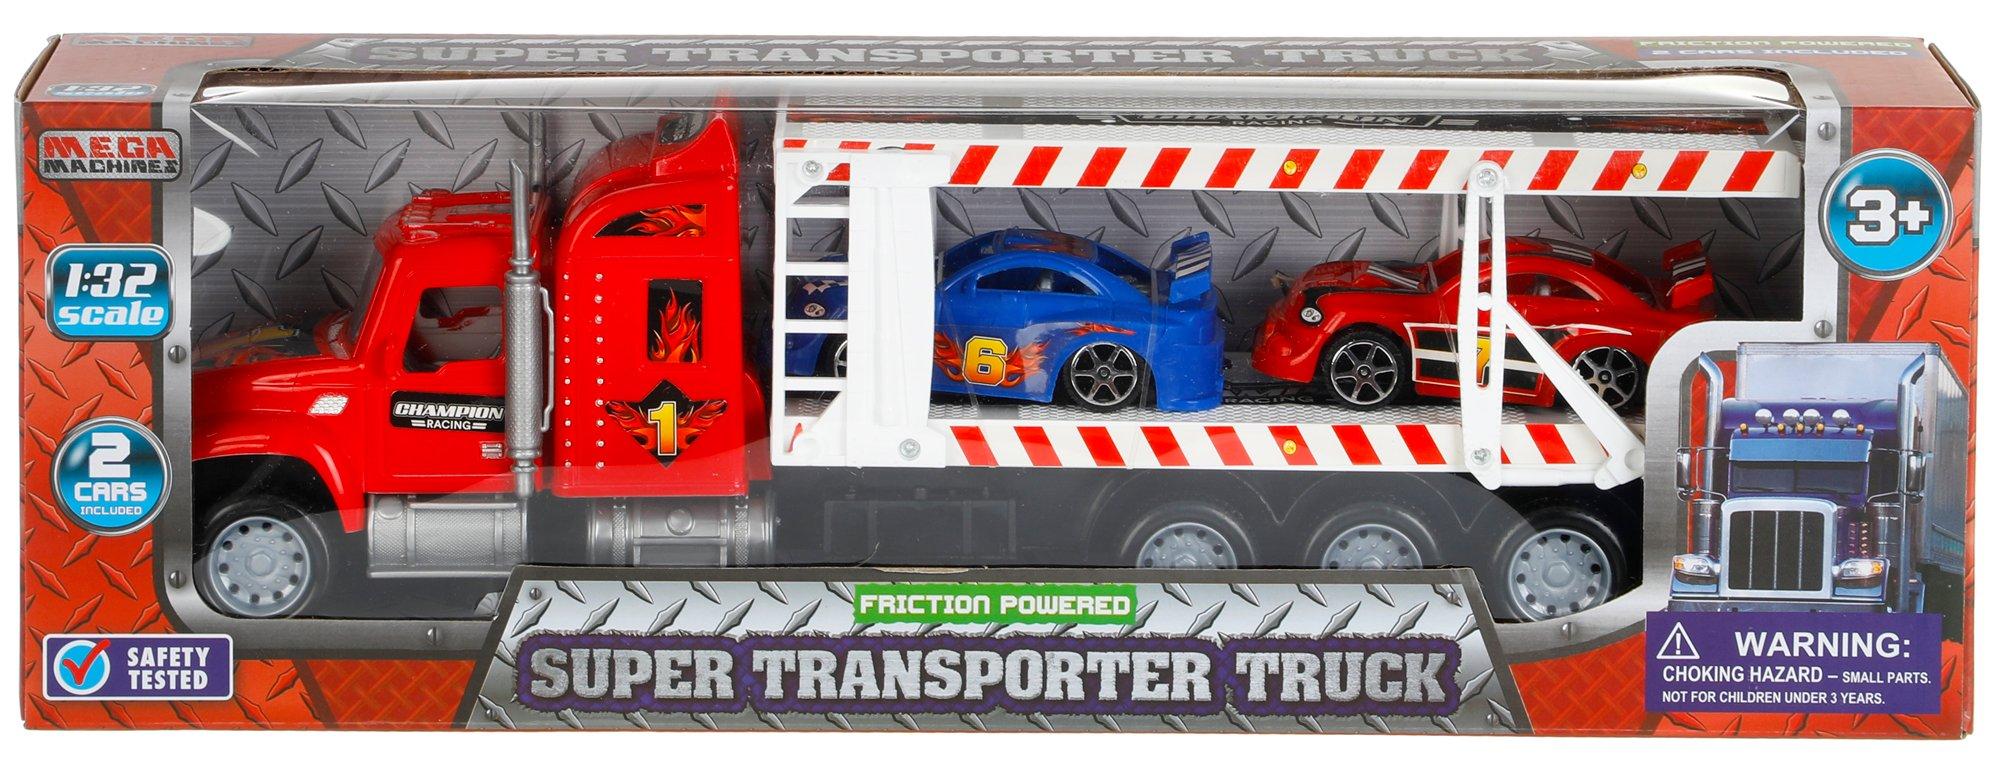 Friction Powered Super Transporter Truck